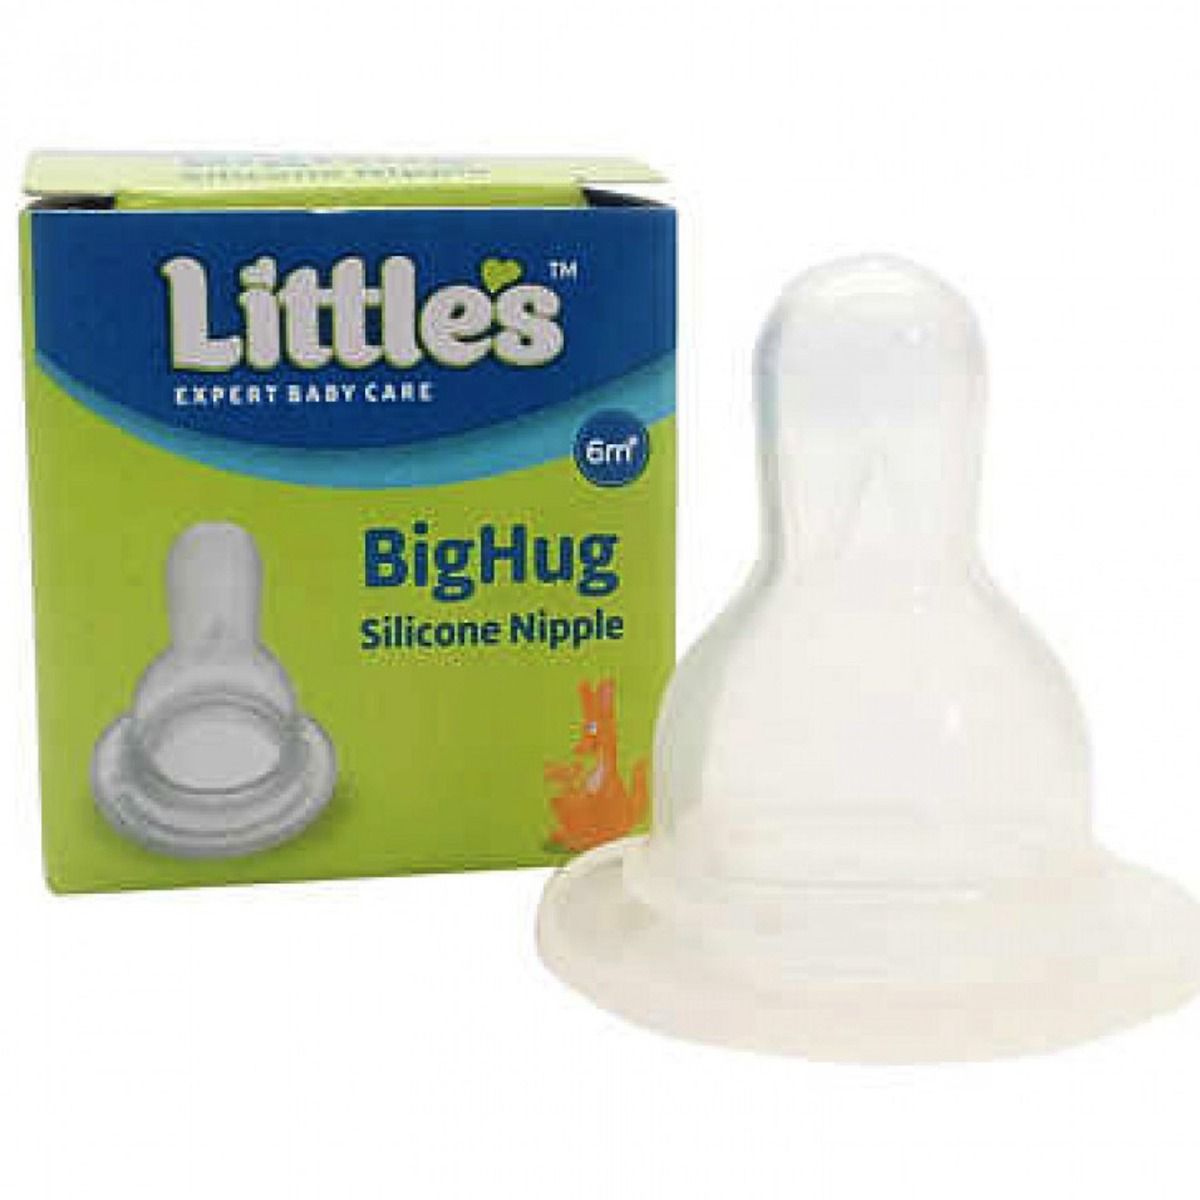 Buy Little's Big Hug Silicon Nipple 6M+, 1 Count Online